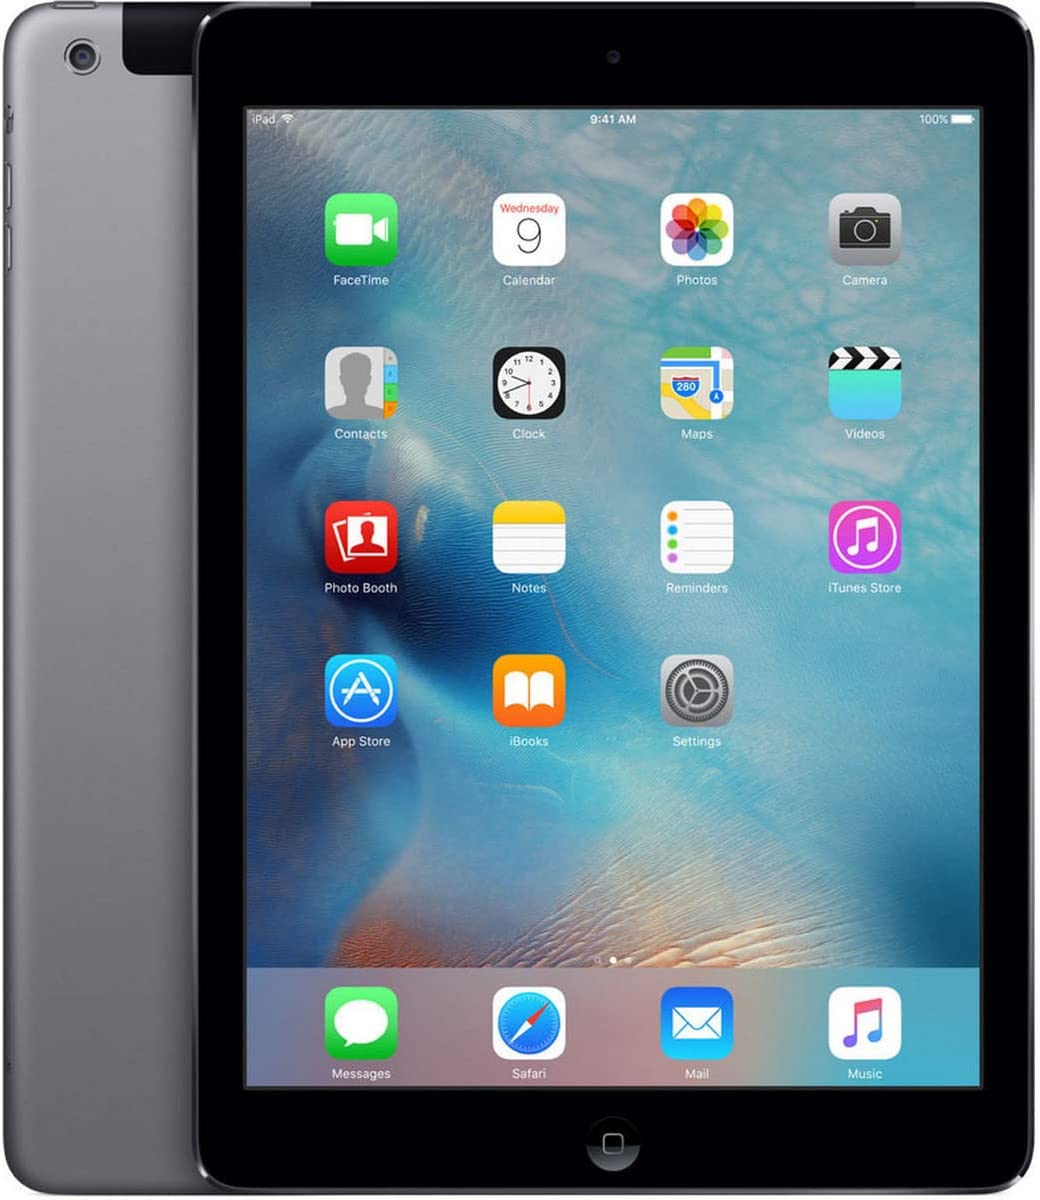 Apple iPad Air 2 a1567 16GB Space Gray Tablet WiFi + 4G Unlocked GSM/CDMA - Smart Tech Shopping